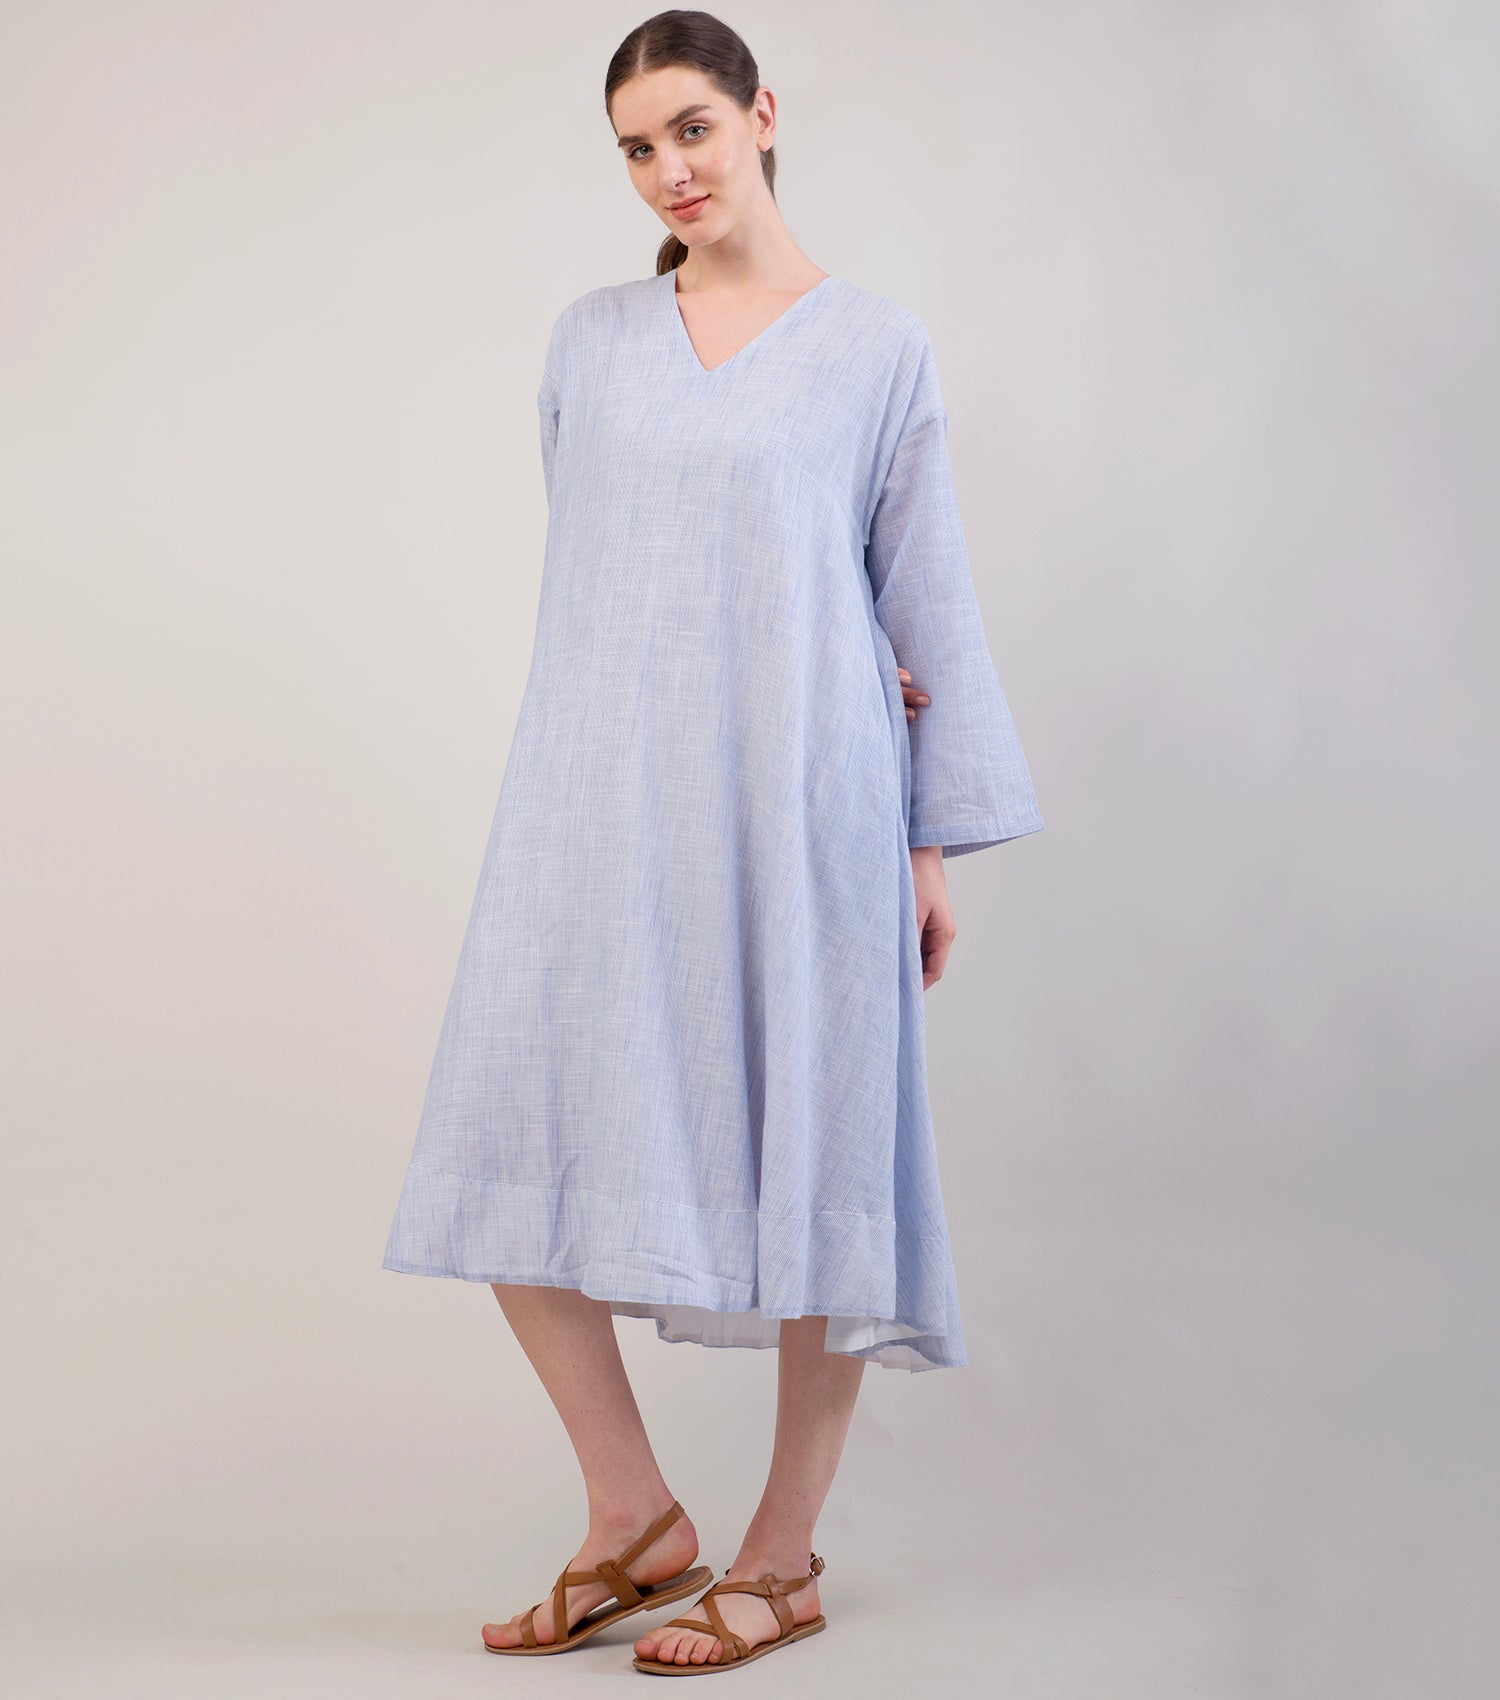 Sky Blue Woven Cotton Dress